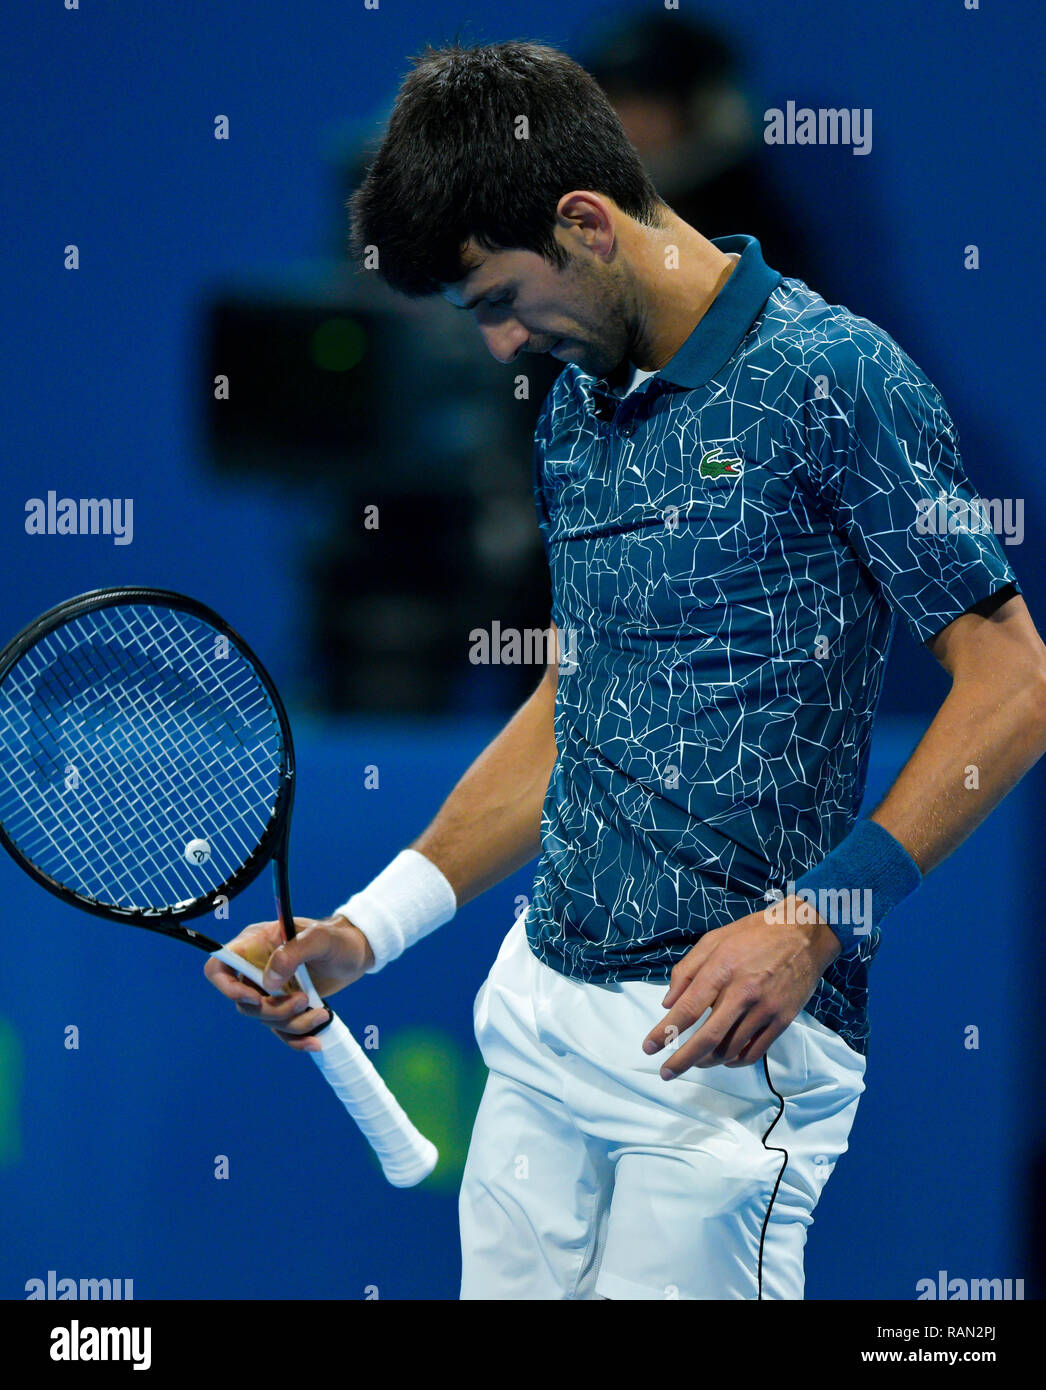 Doha, Qatar. 4th Jan, 2019. (SP)QATAR-DOHA-TENNIS-QATAR Novak Djokovic of  Serbia reacts during the singles semifinal match against Roberto Bautista  Agut of Spain at the ATP Qatar Open tennis tournament in Doha, capital